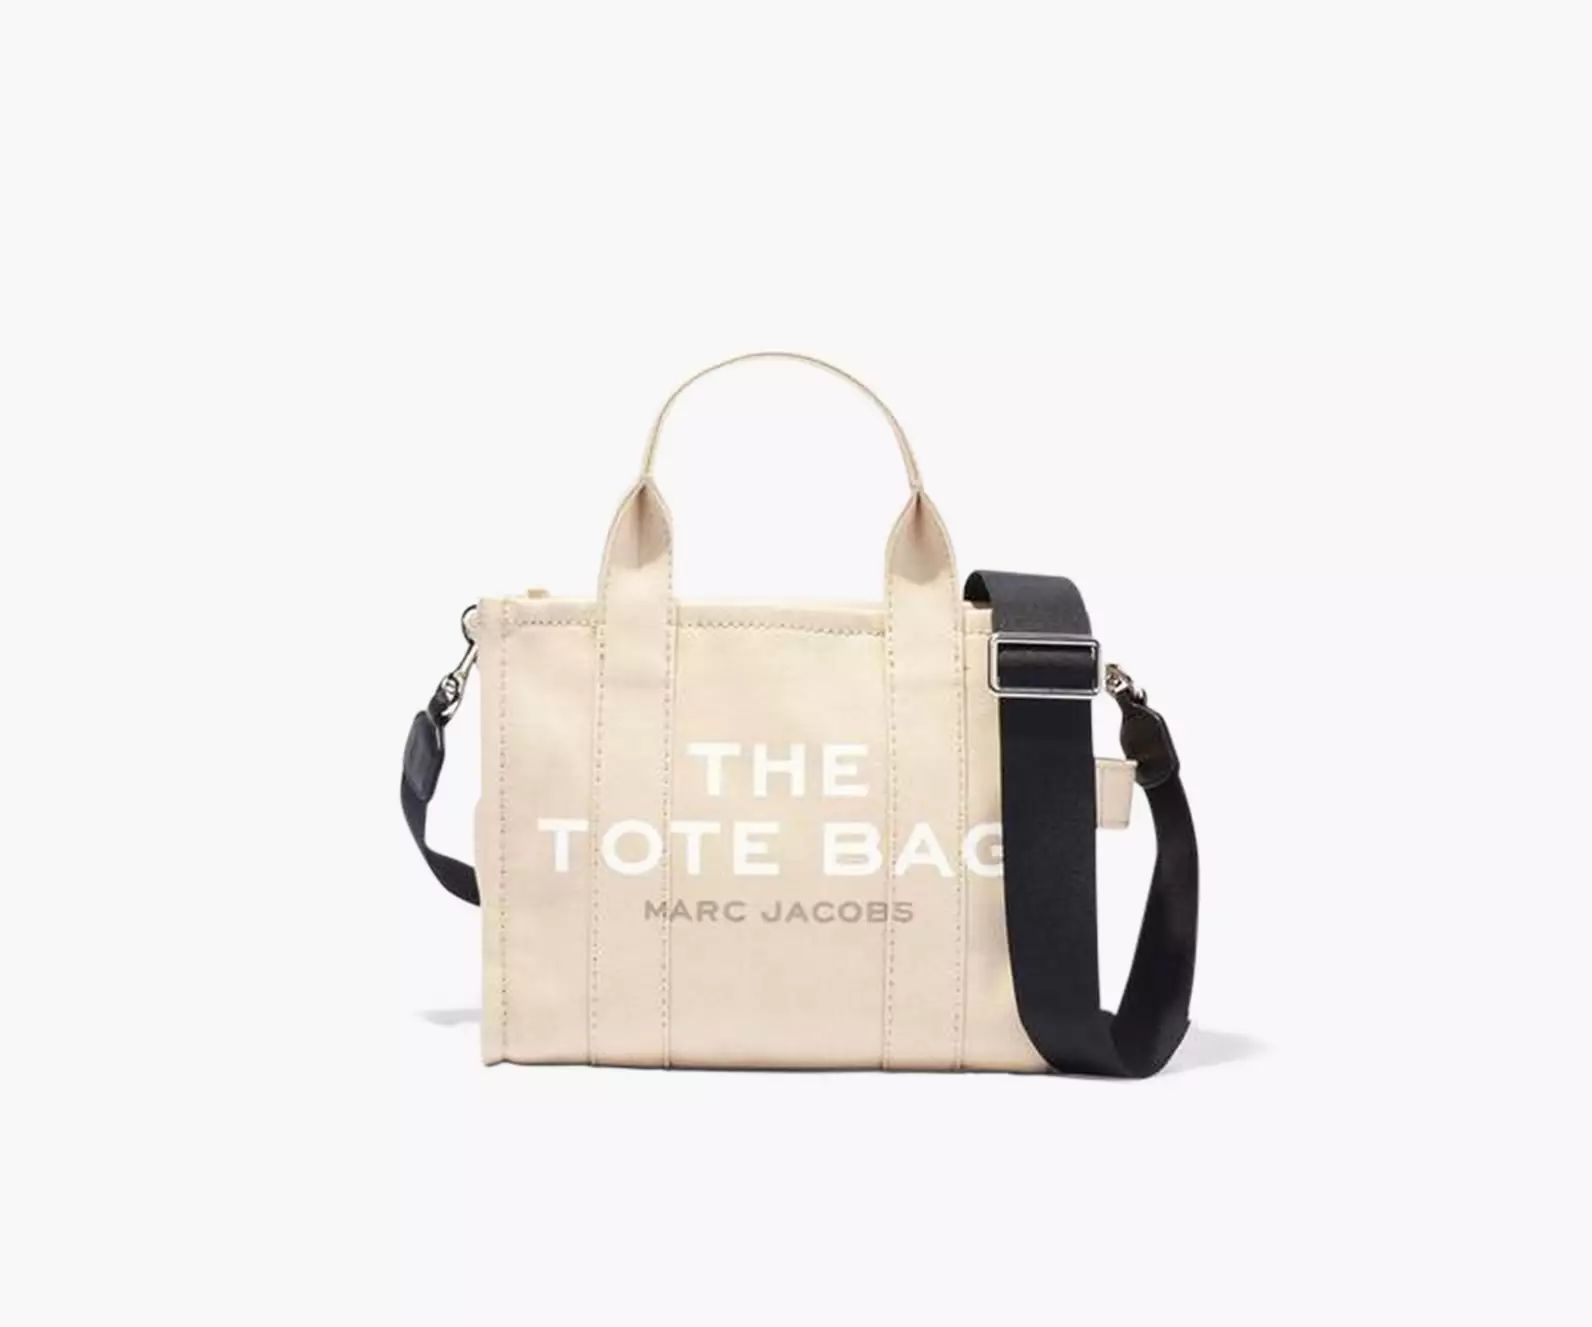 The Mini Tote Bag | Marc Jacobs